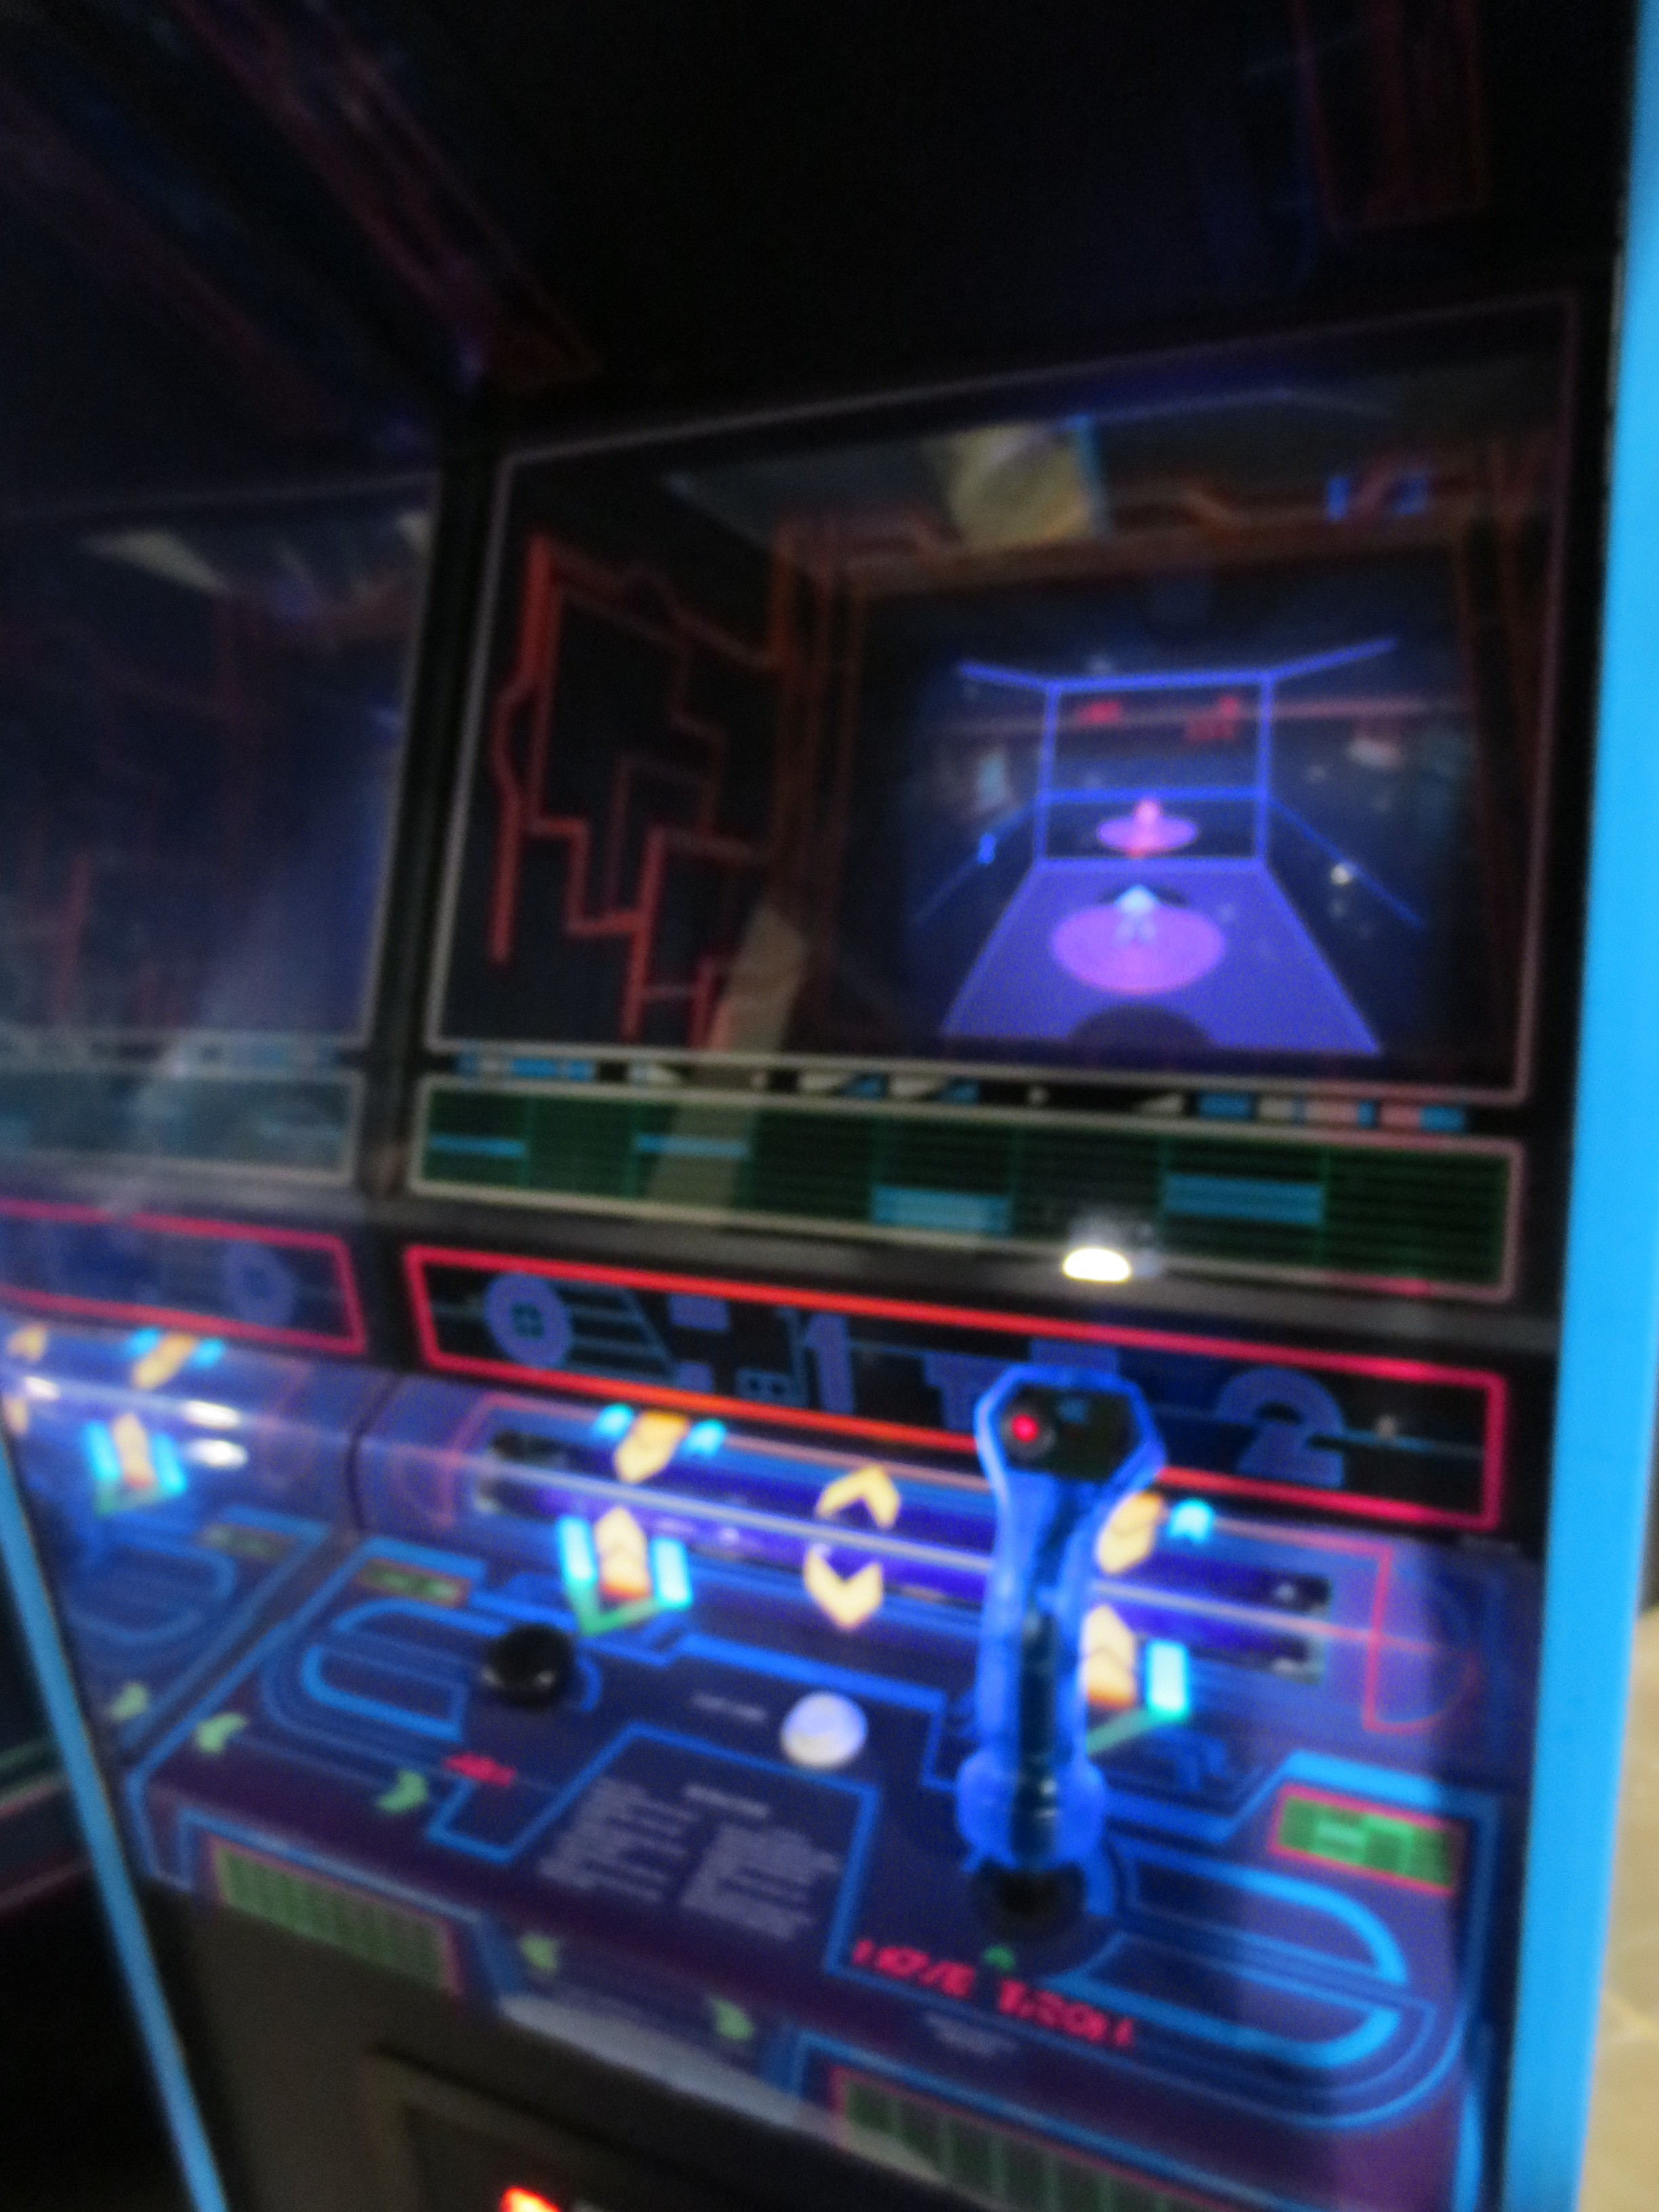  The Tron arcade game. Ultra fun and super sleek-looking. 